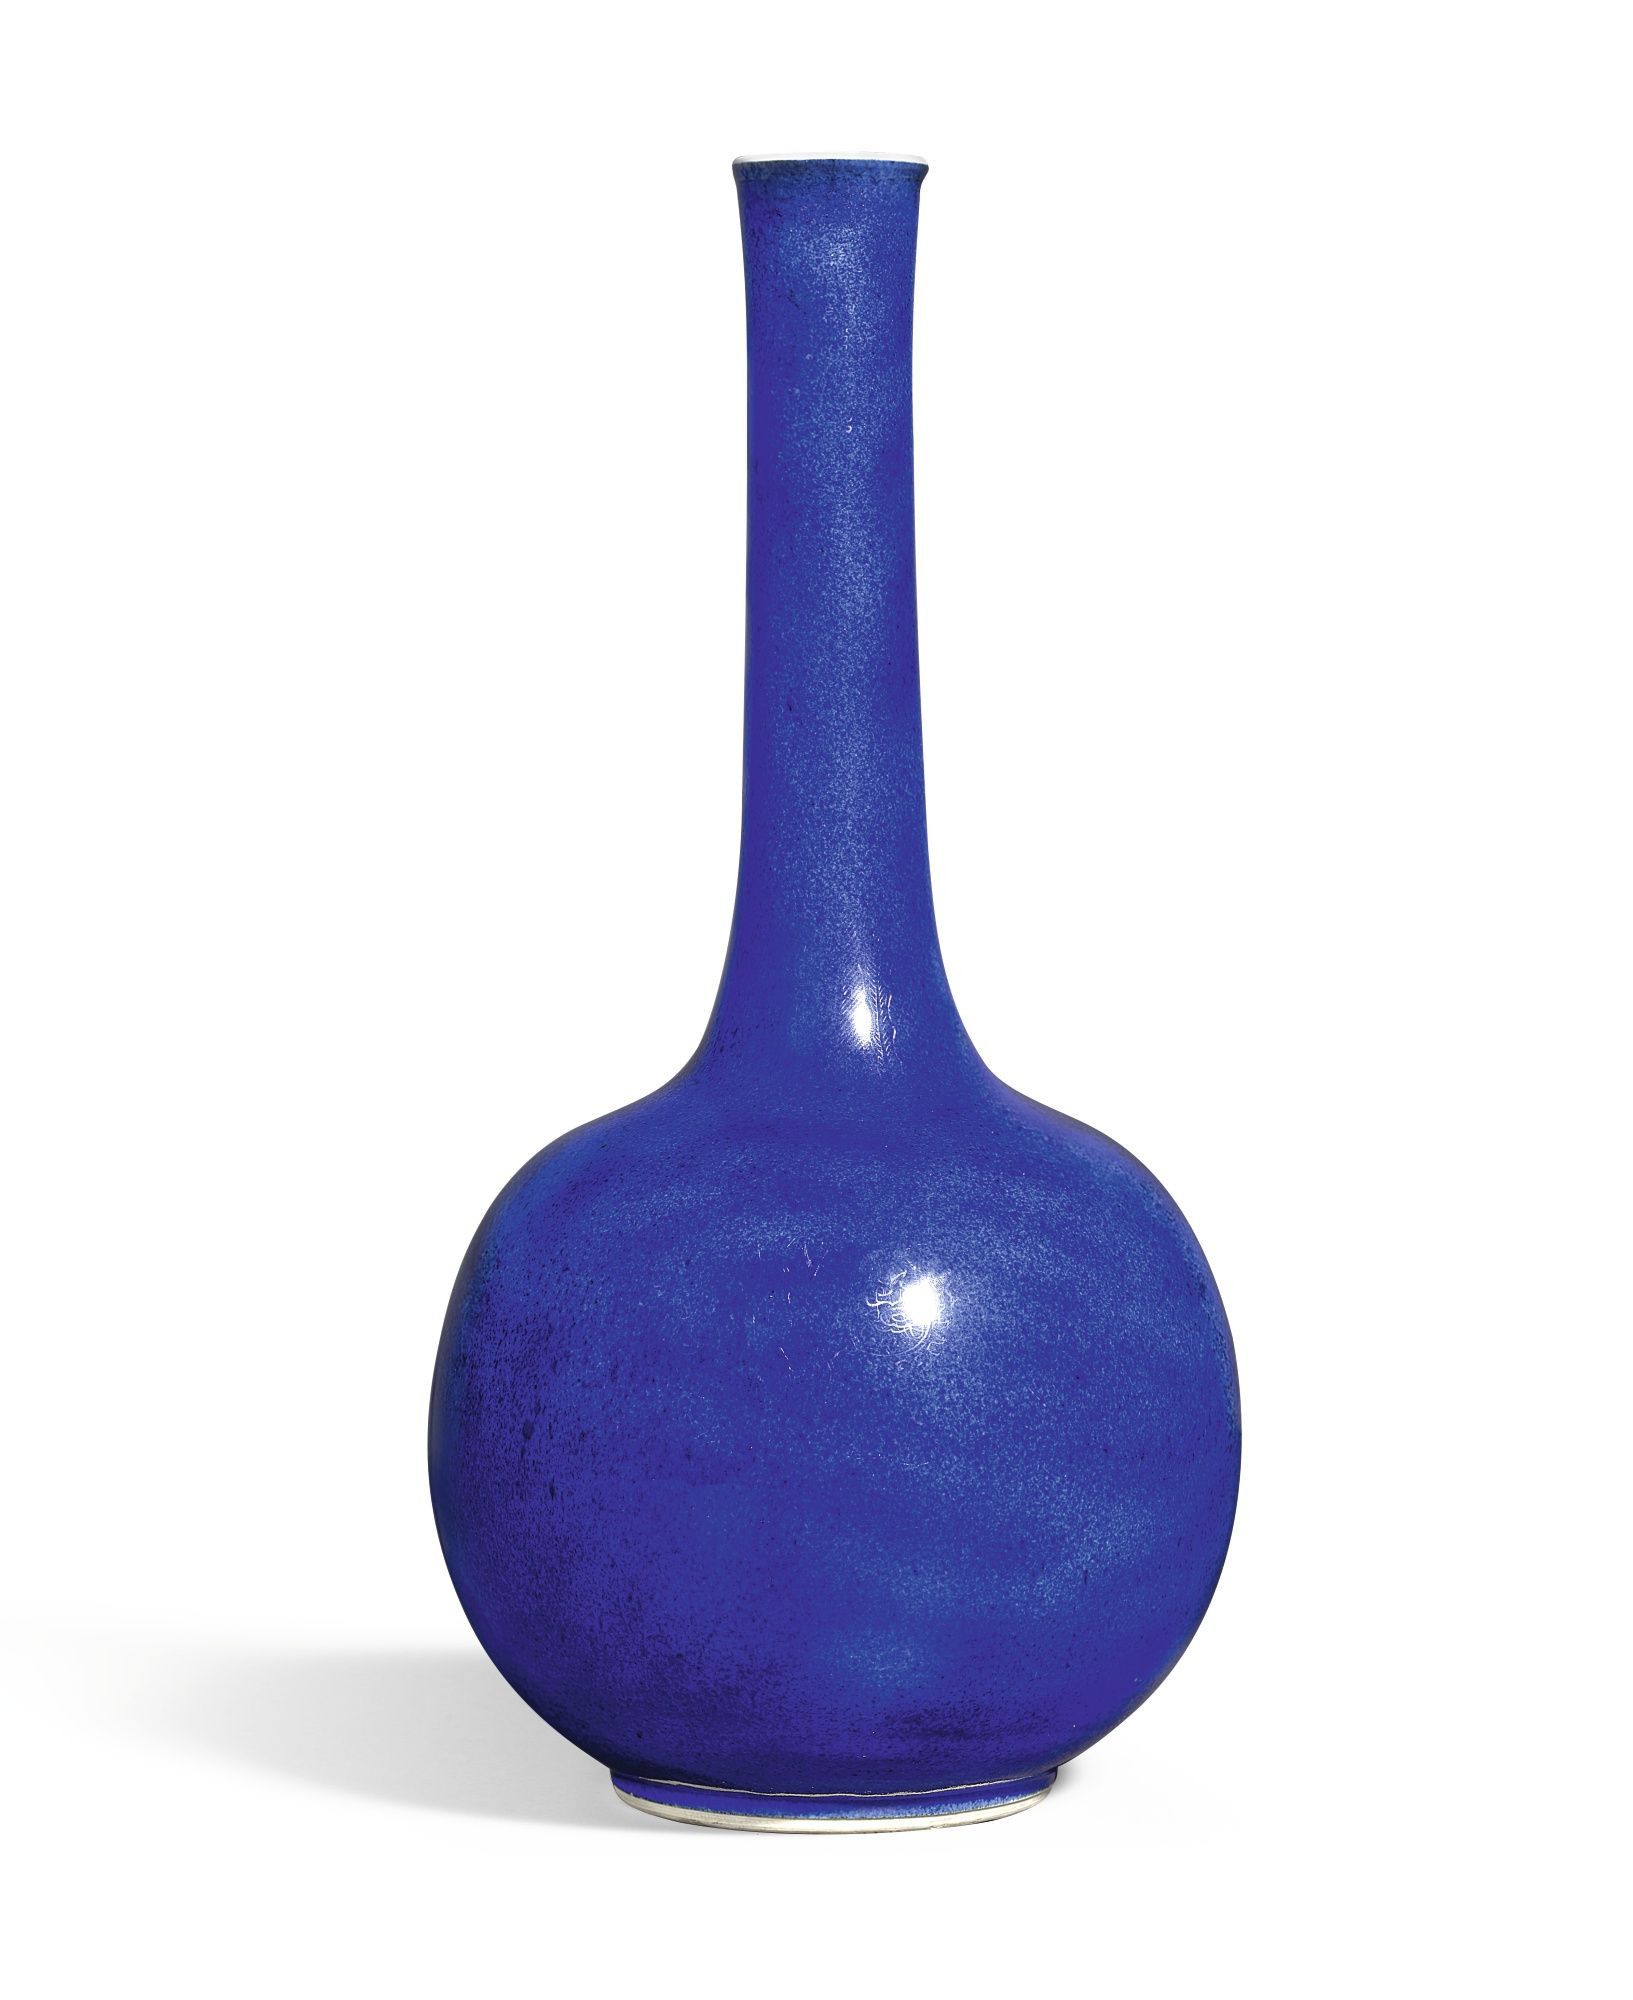 10 Ideal Narrow Neck Vase 2022 free download narrow neck vase of a powder blue glazed bottle vase qing dynasty kangxi period regarding a powder blue glazed bottle vase qing dynasty kangxi period 1662 1722